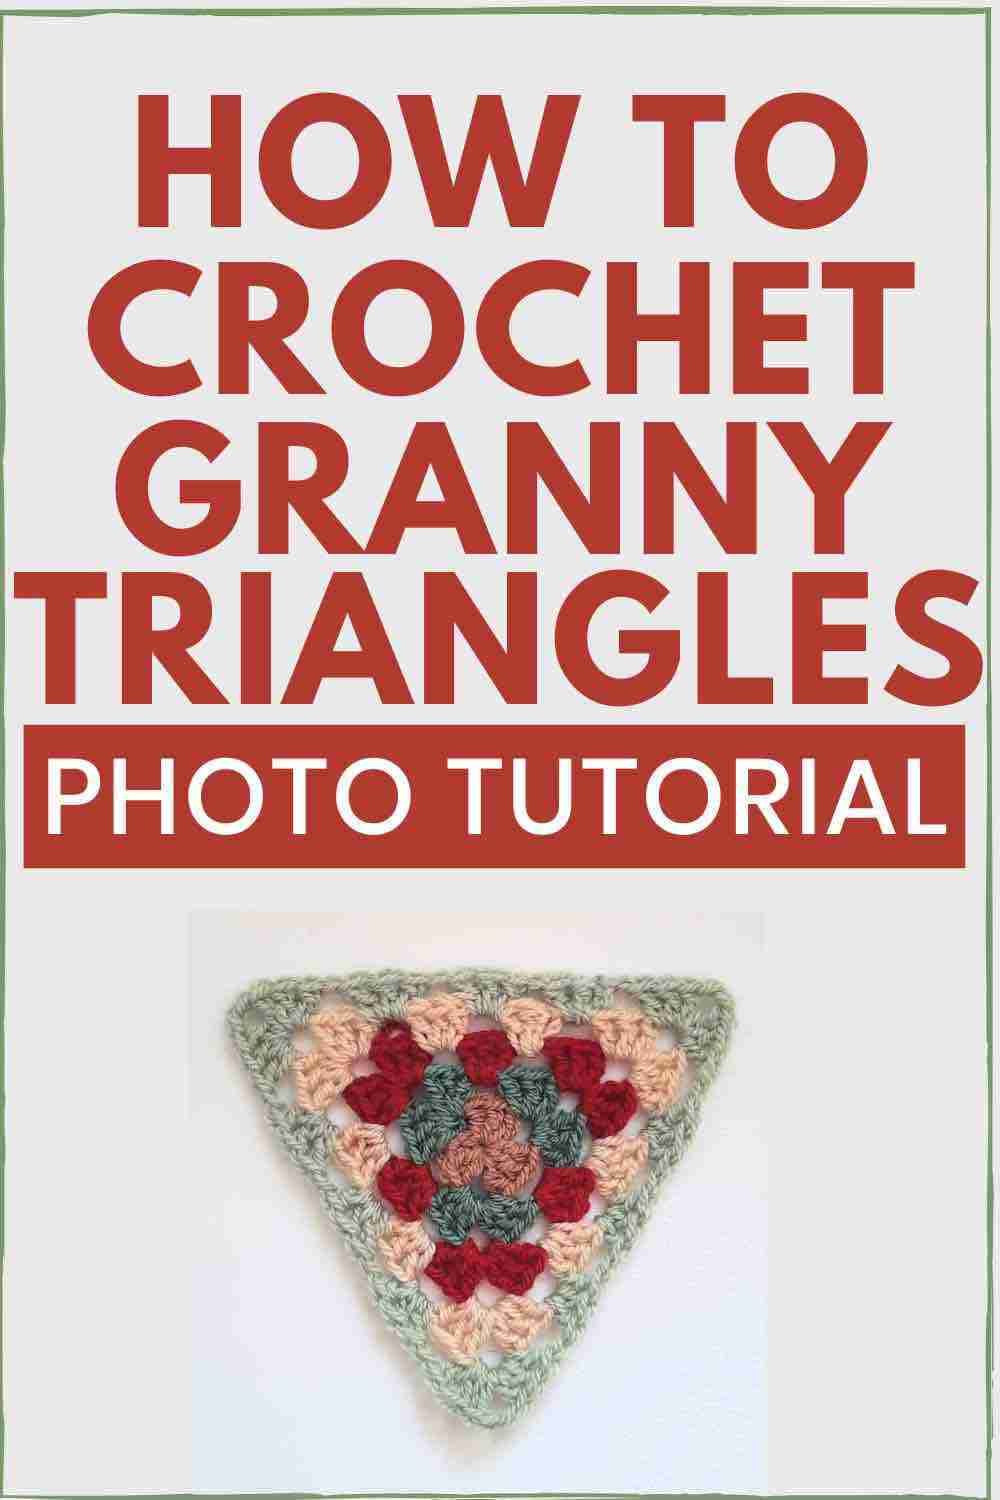 How To Crochet Granny Triangles